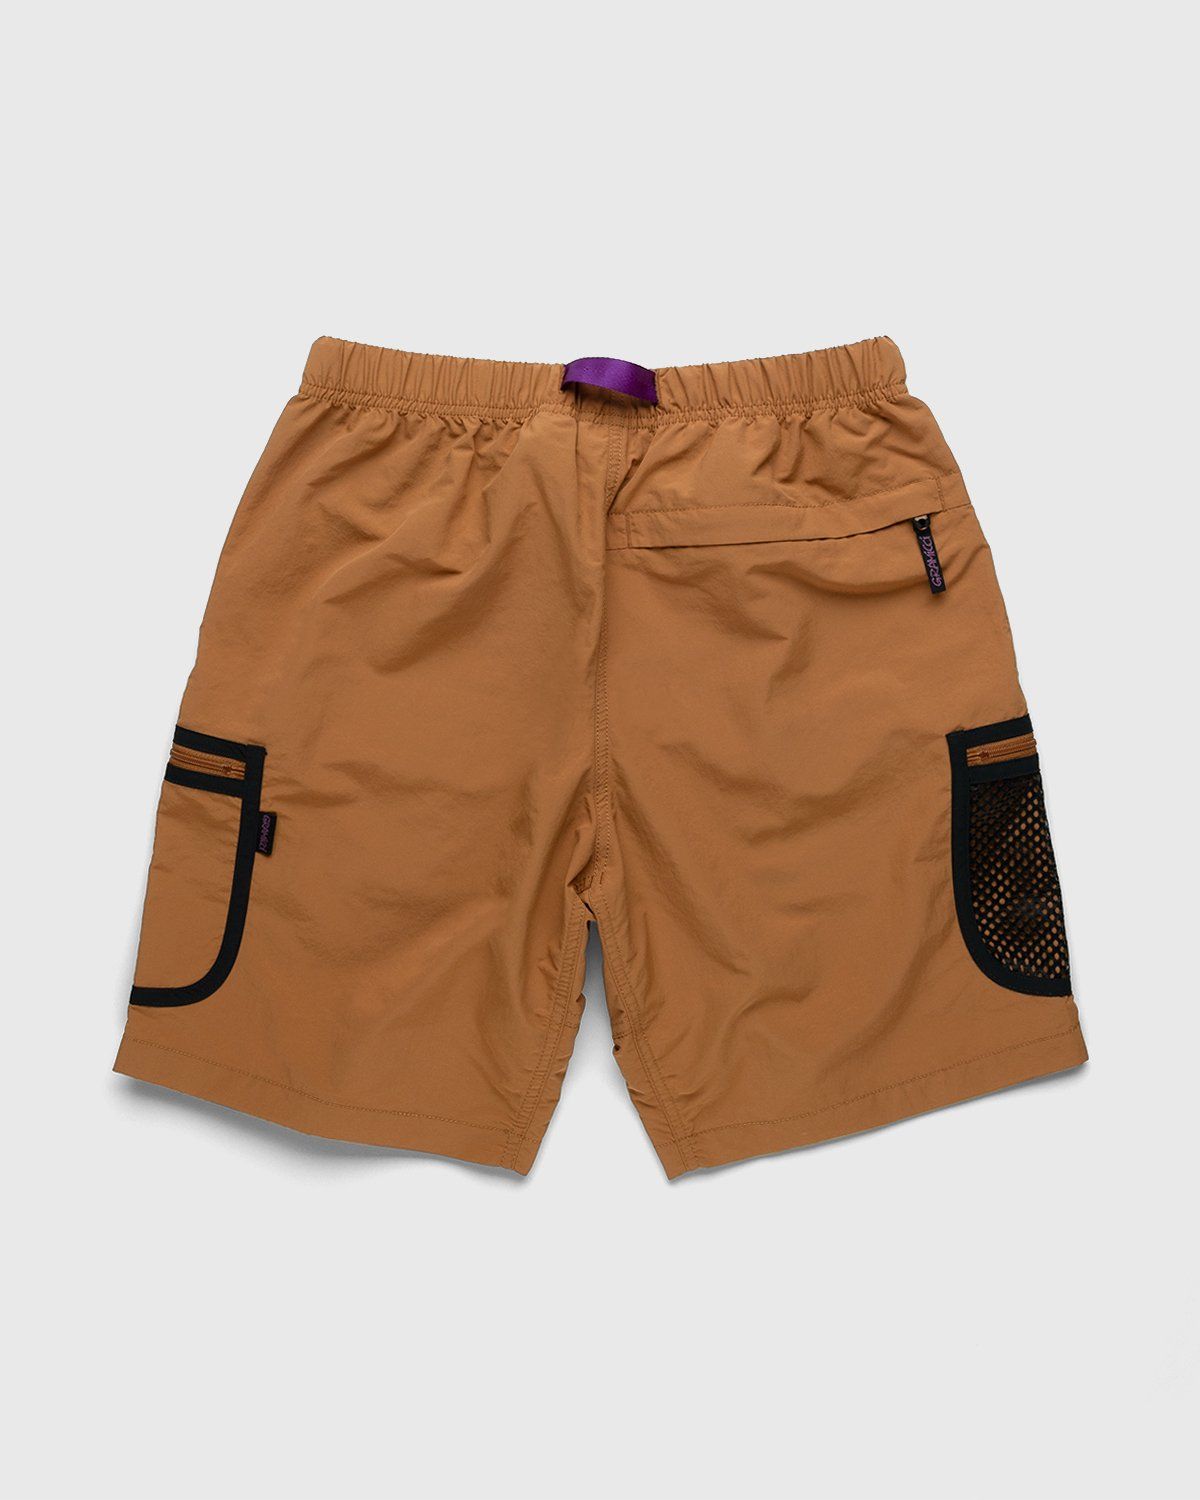 Gramicci x Highsnobiety – Shorts Rust - Shorts - Brown - Image 2